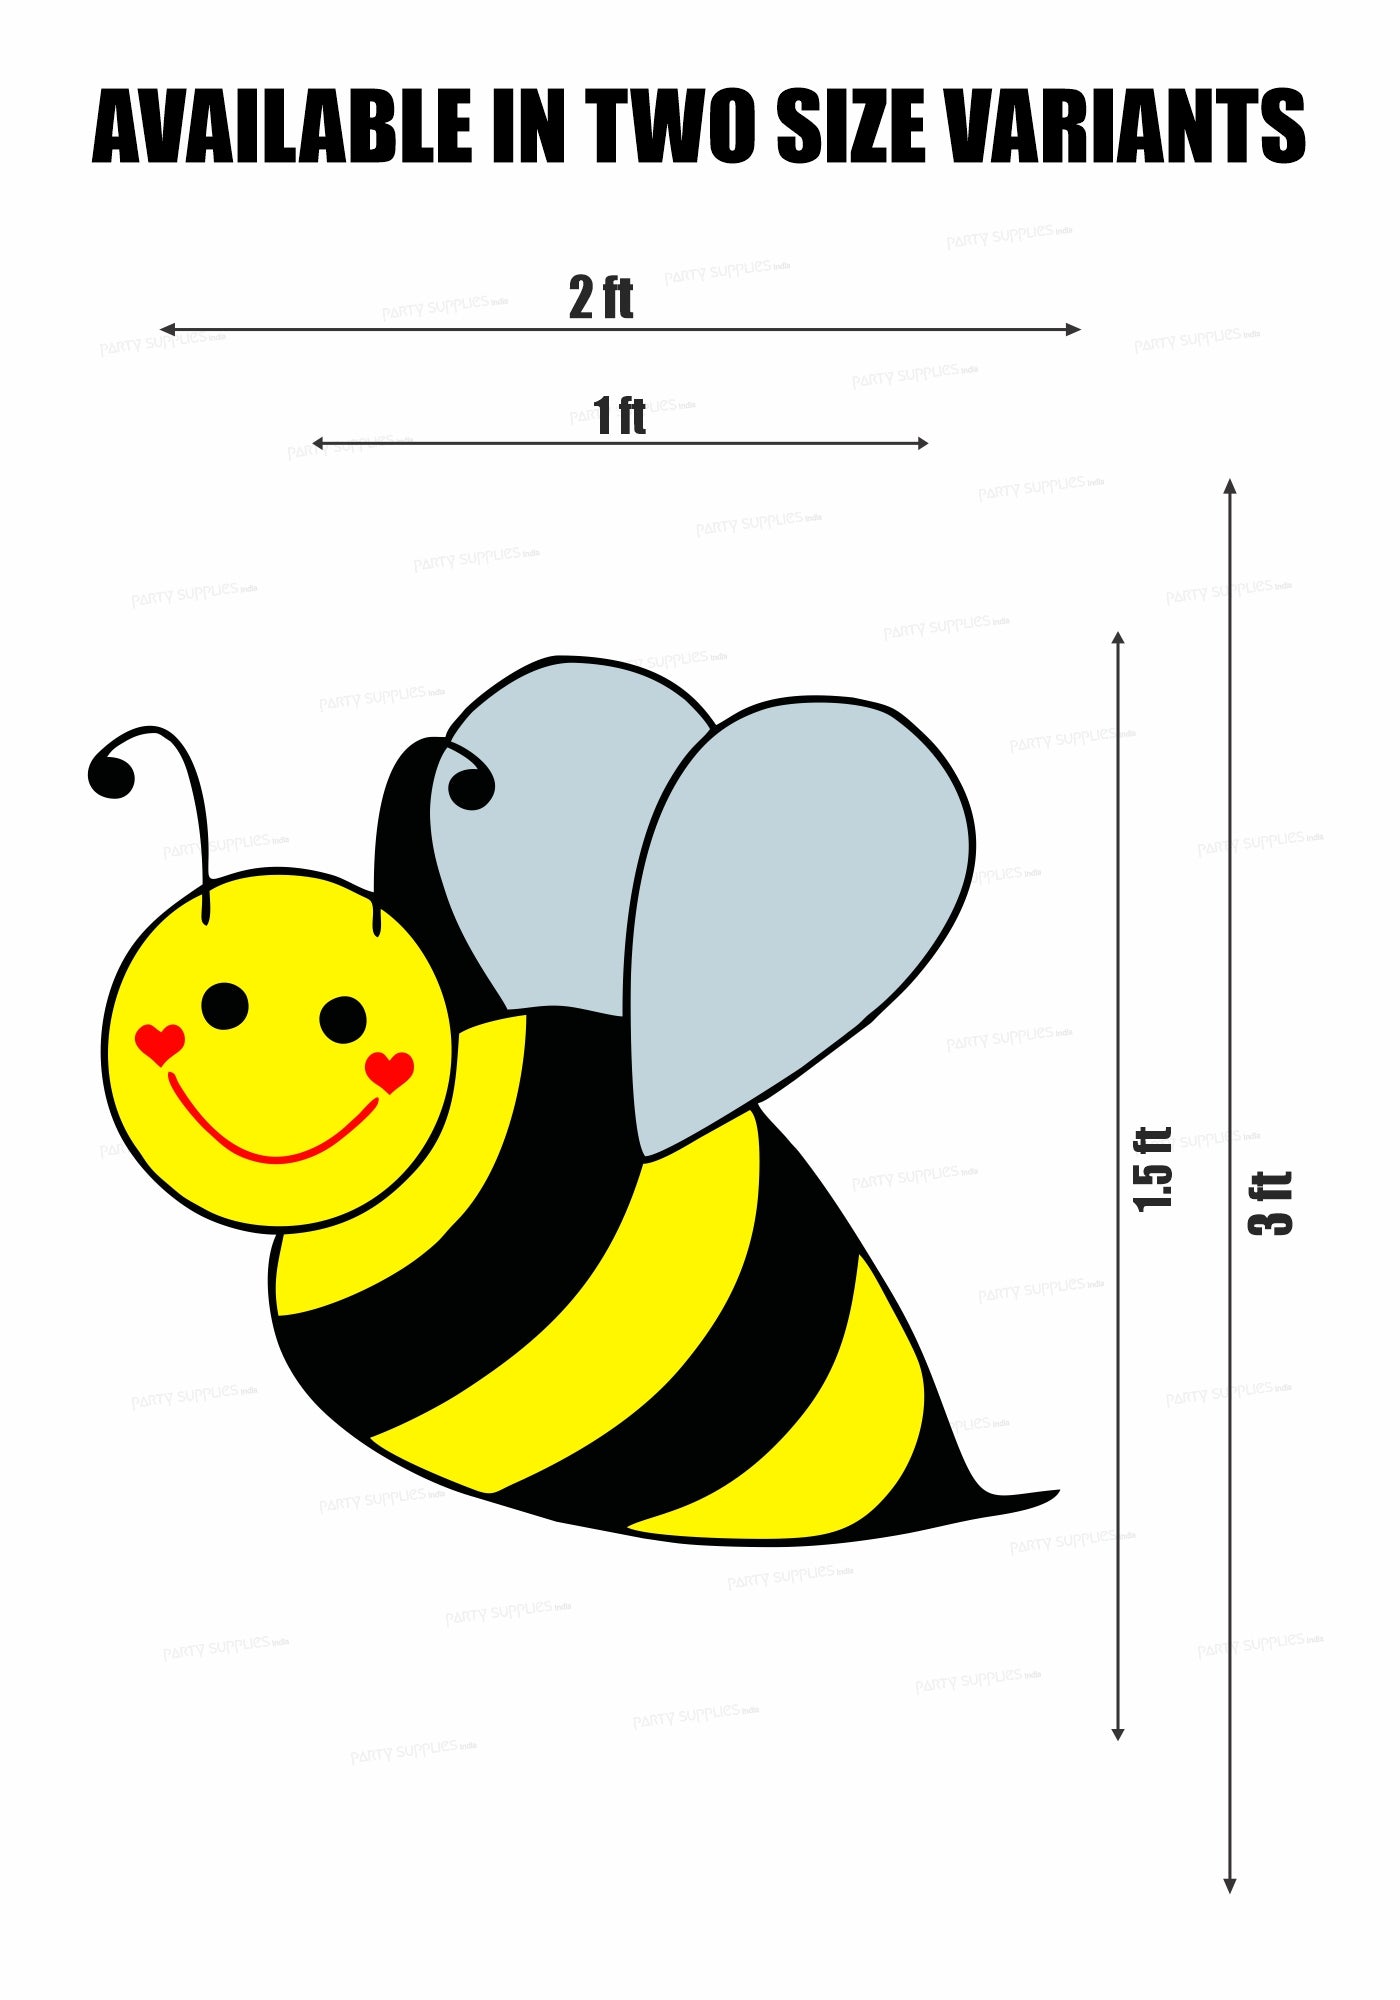 PSI Bumble Bee Theme Cutout - 17